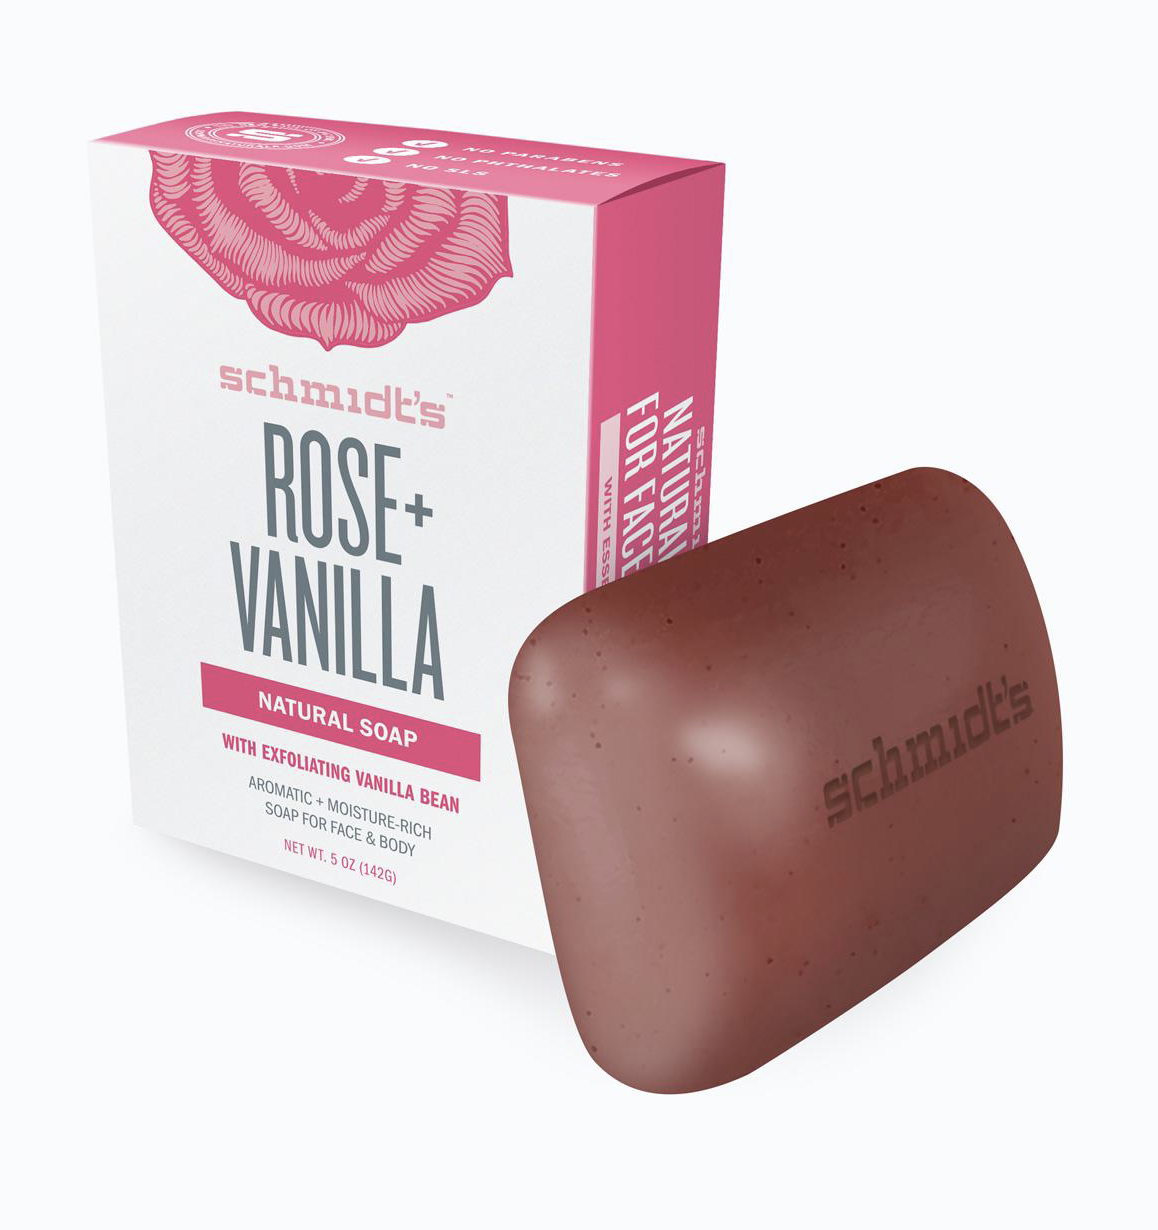 Bar Soap Rose + Vanilla with Exfoliating Vanilla Bean (6 Pack)